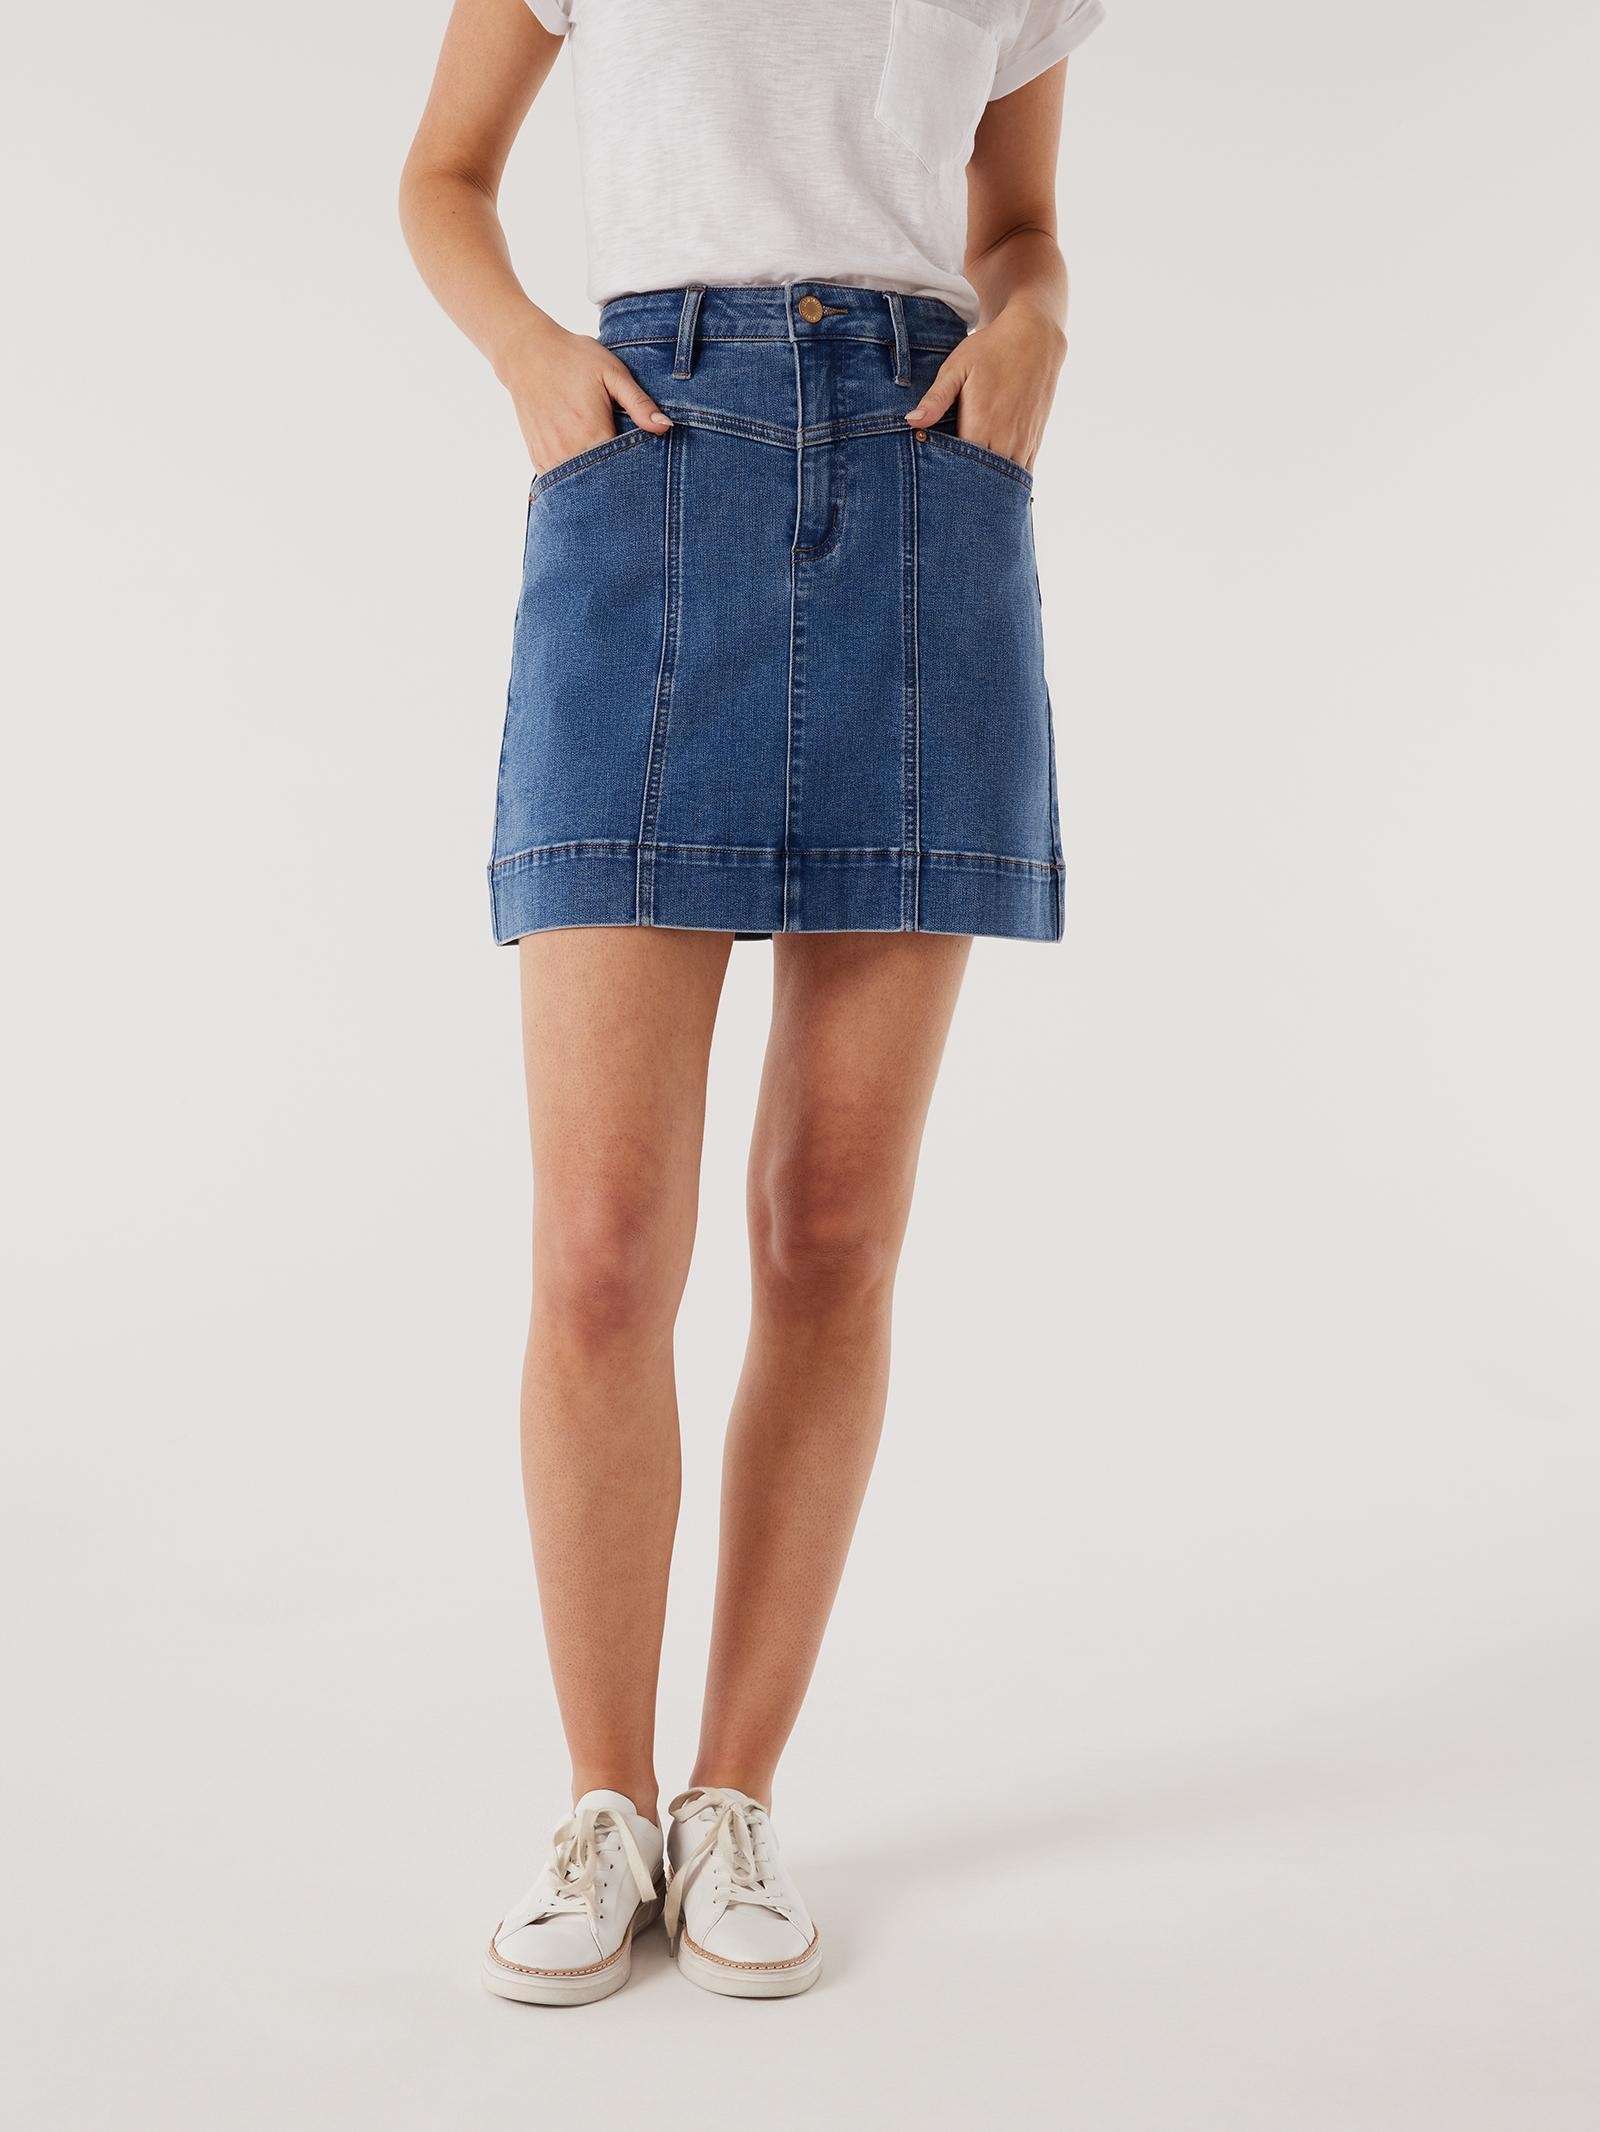 Jeanswest Womens Blue Flat Front Stretch Floral Denim Skirt Size 6 | eBay